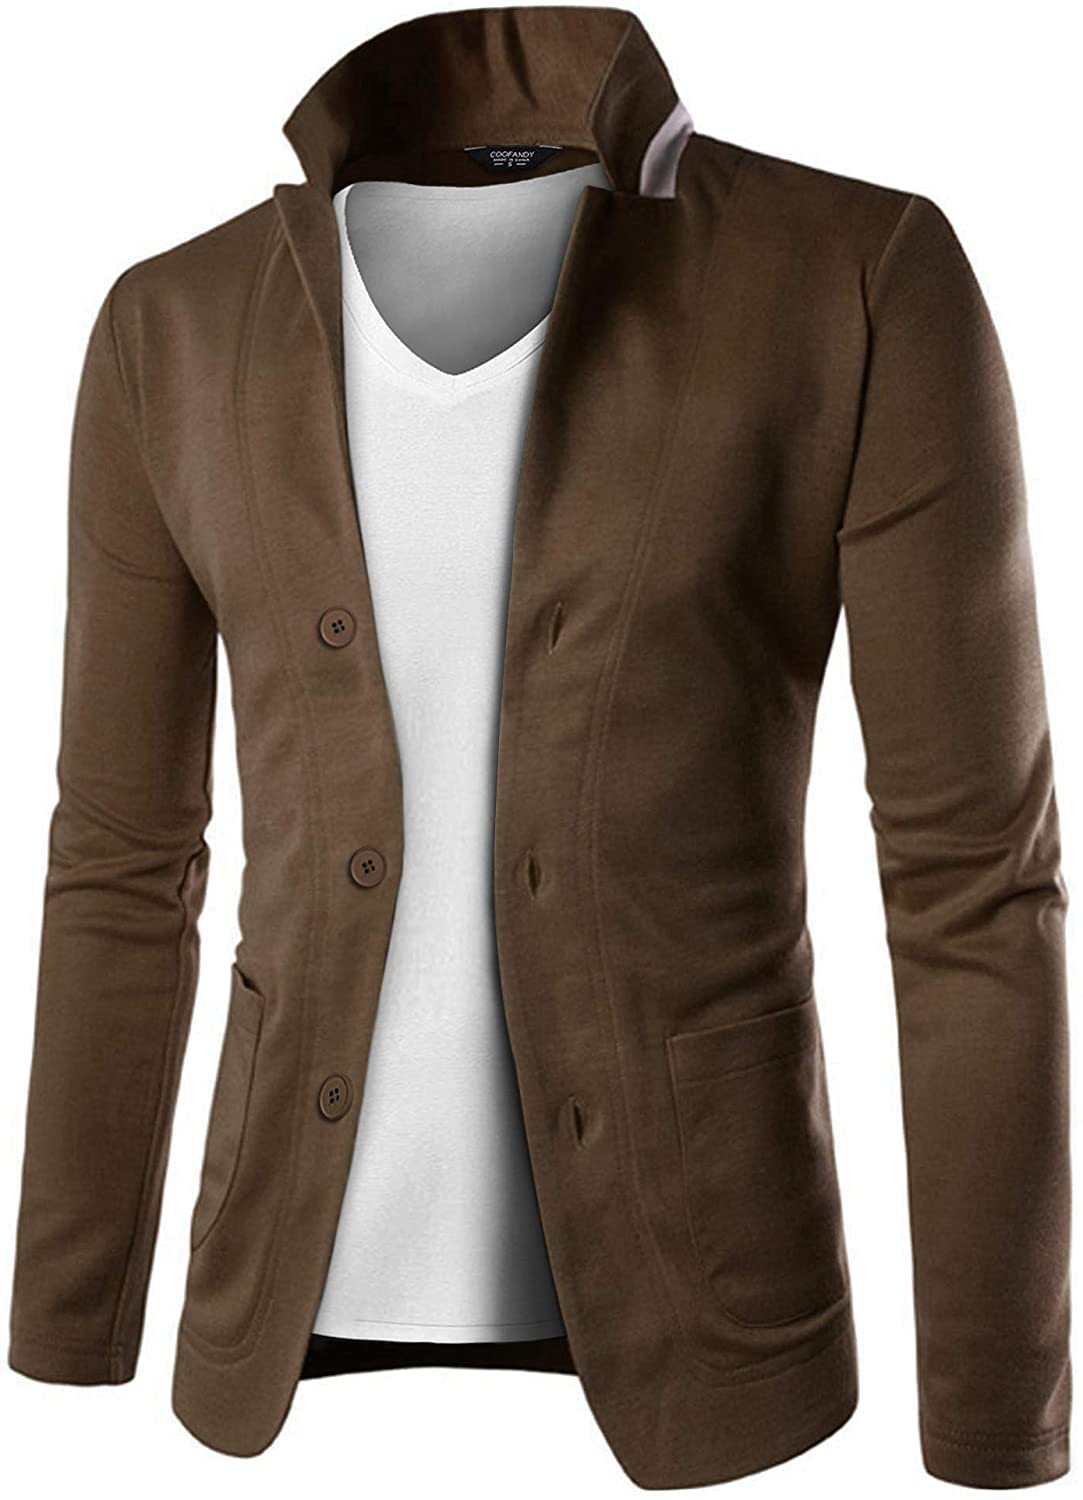 COOFANDY Men's Casual Sports Coats Dress Blazer Stylish Lightweight Suit Jackets 